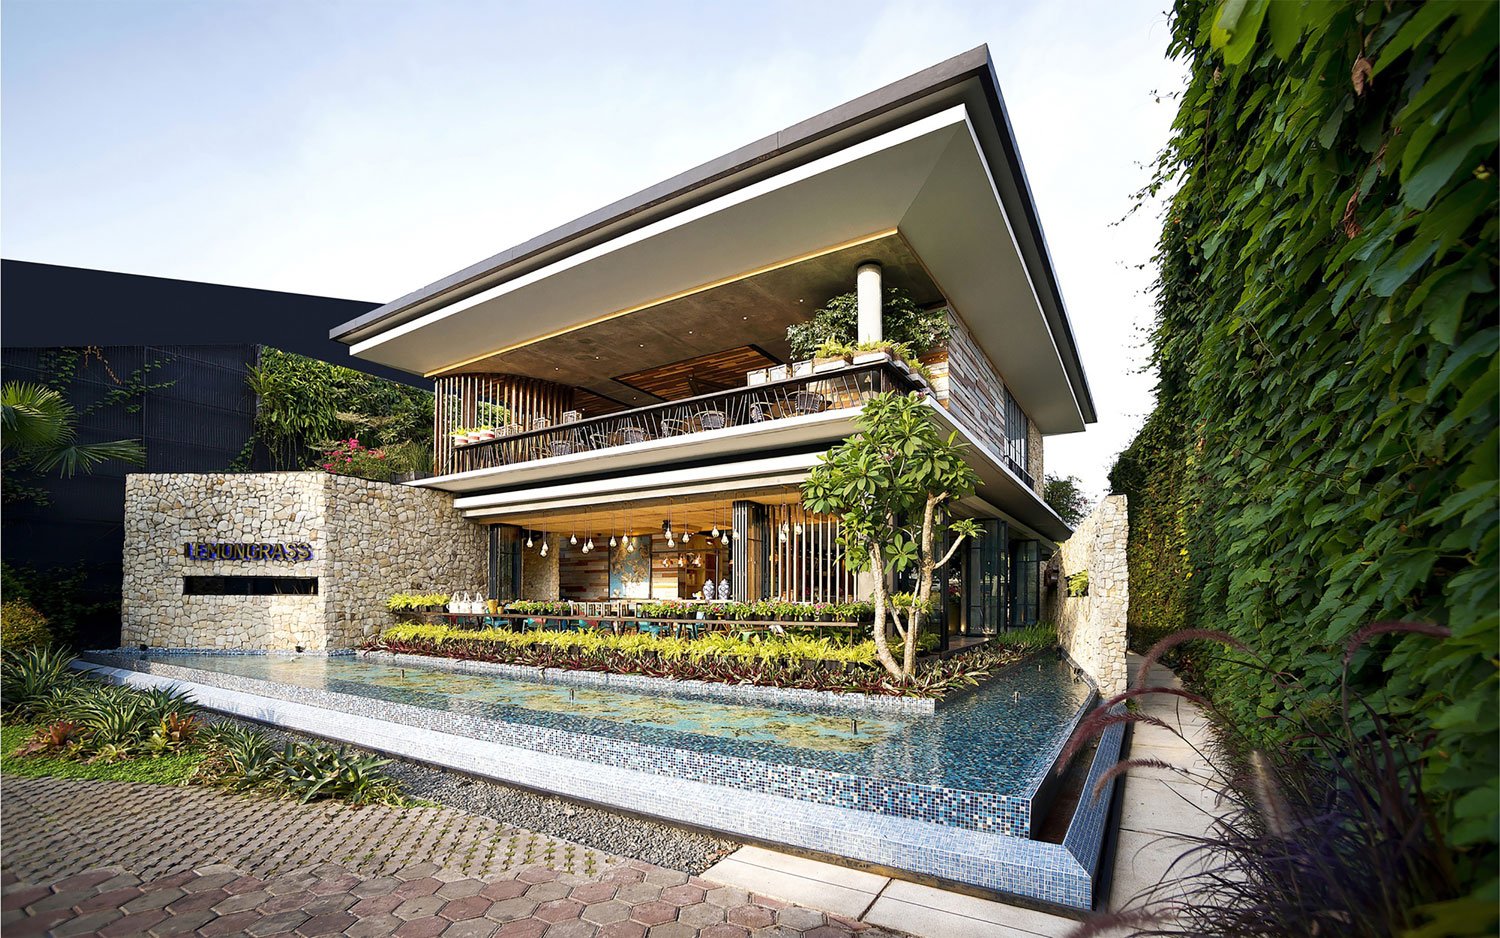 Stylish Tropical Paradise Theme of Lemongrass Restaurant Designed by Einstein & Associates-02